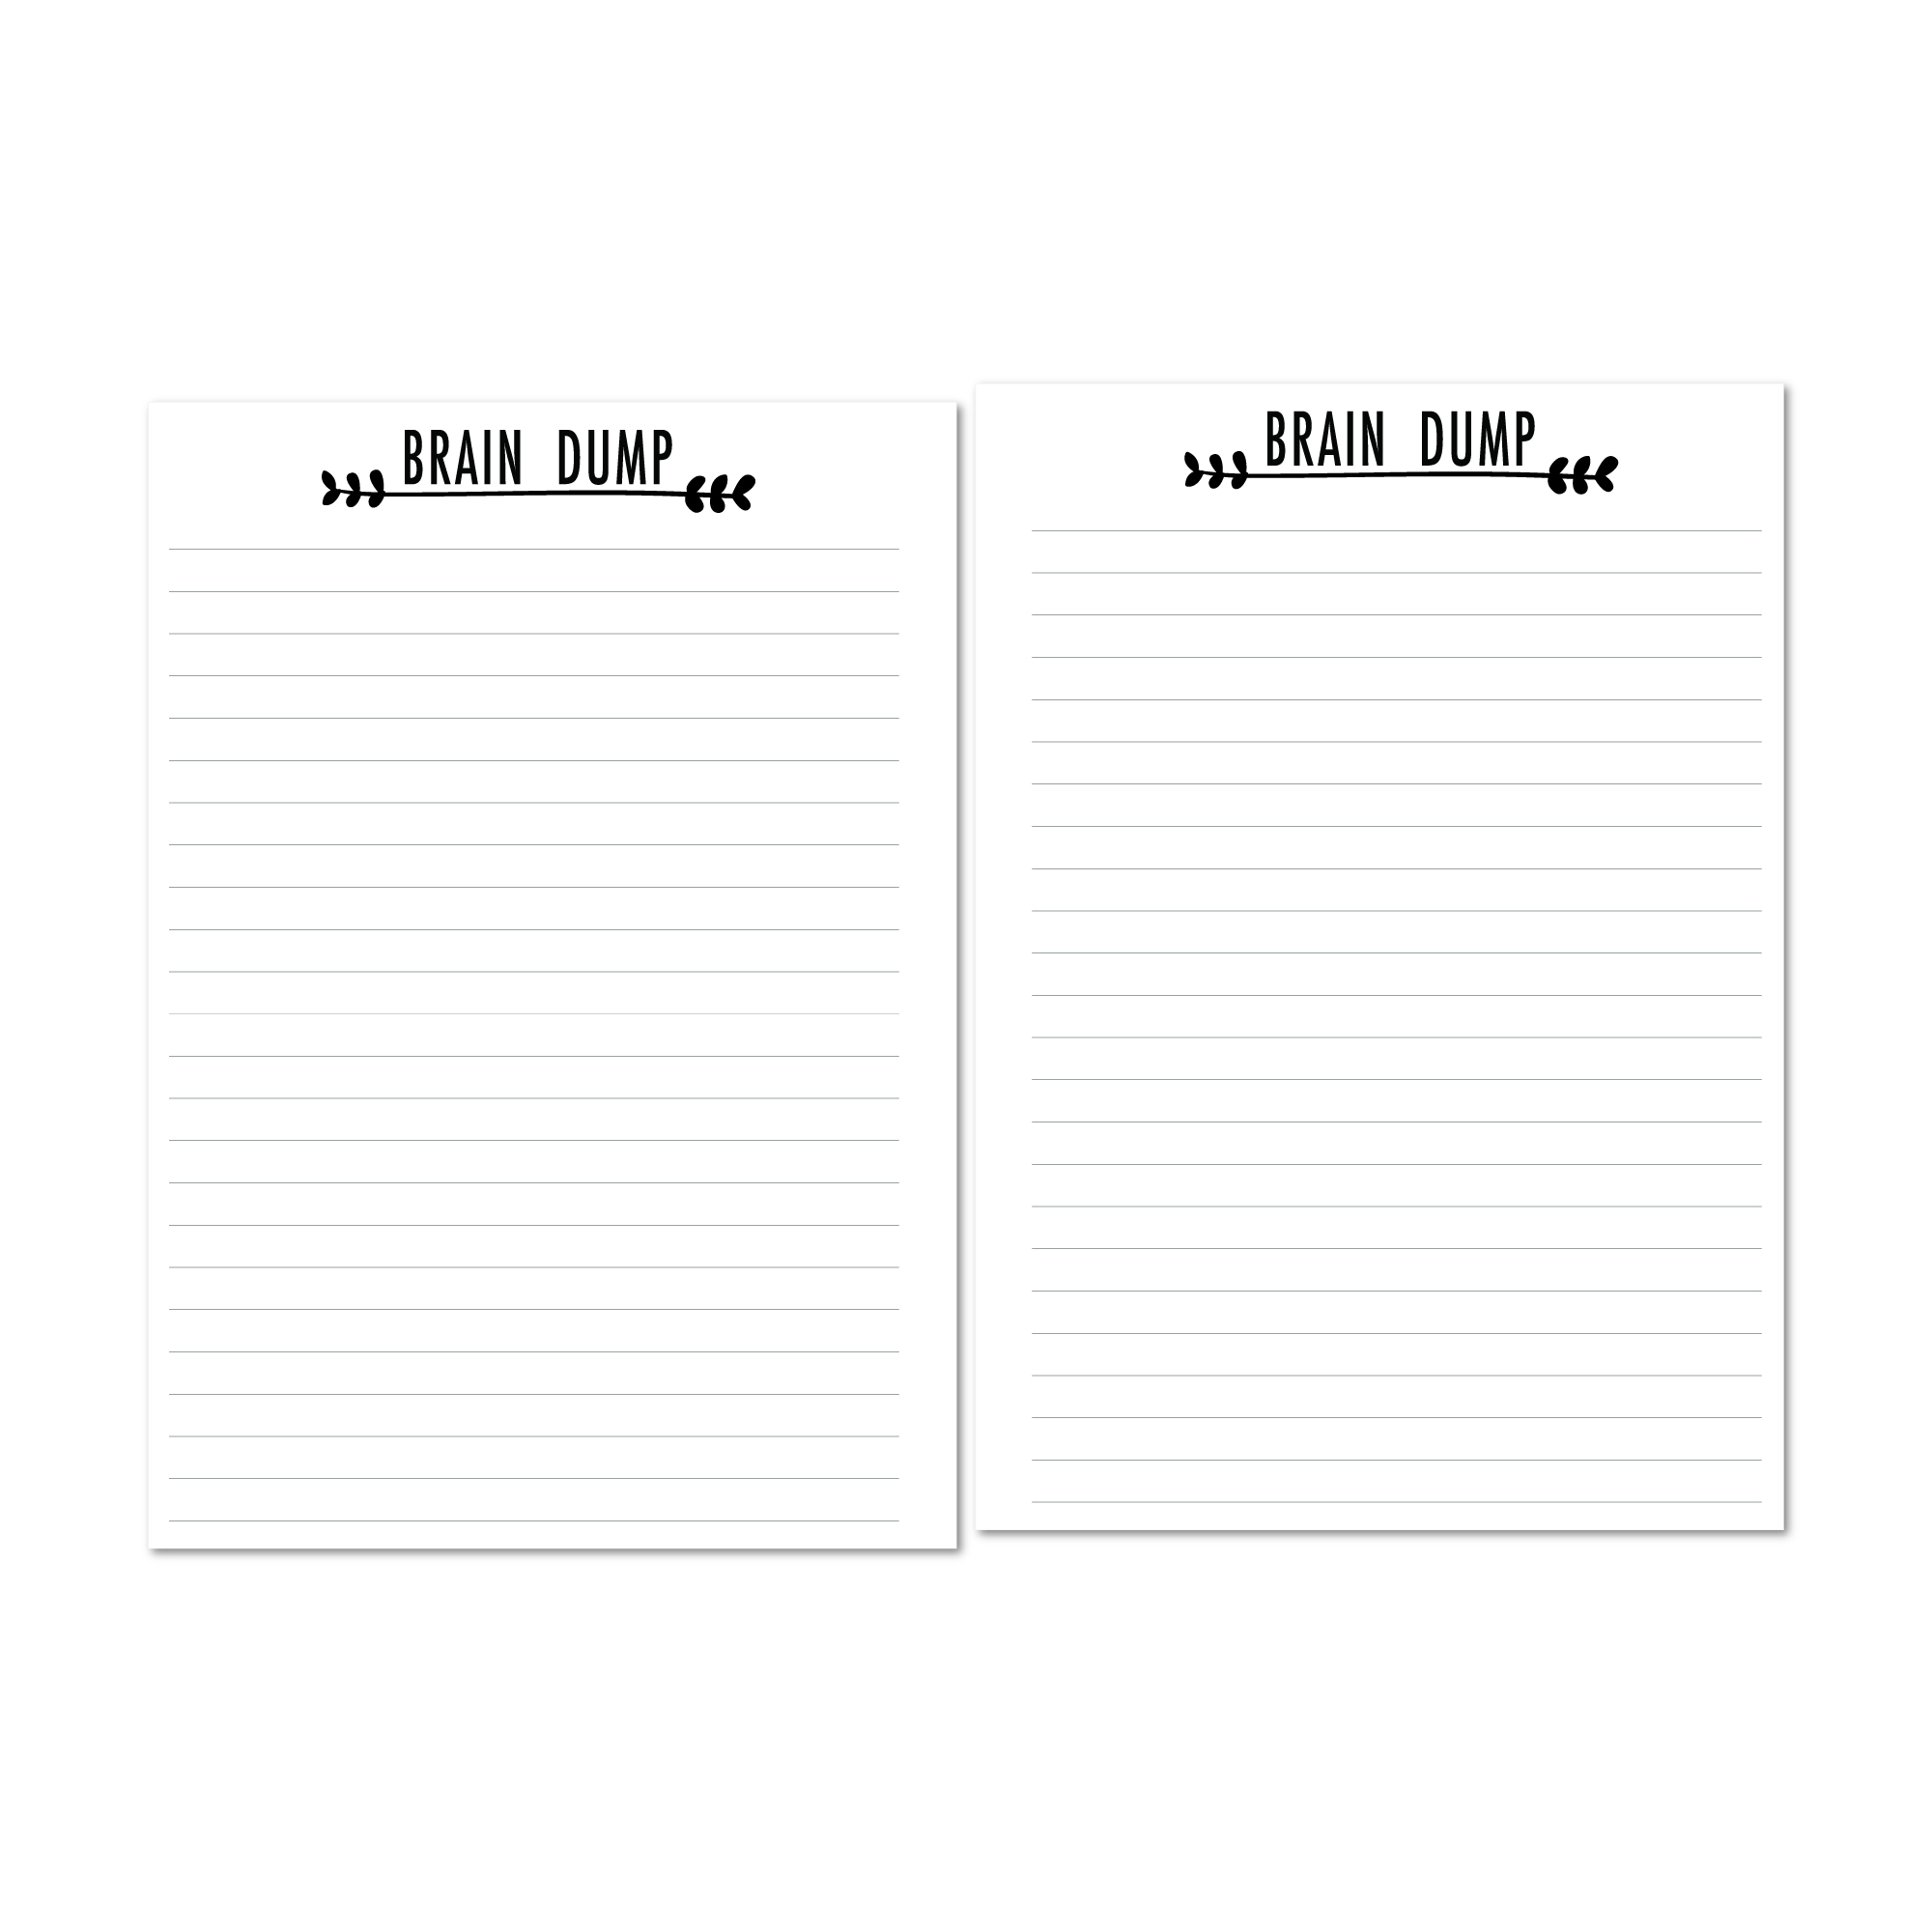 Brain Dump note sheets